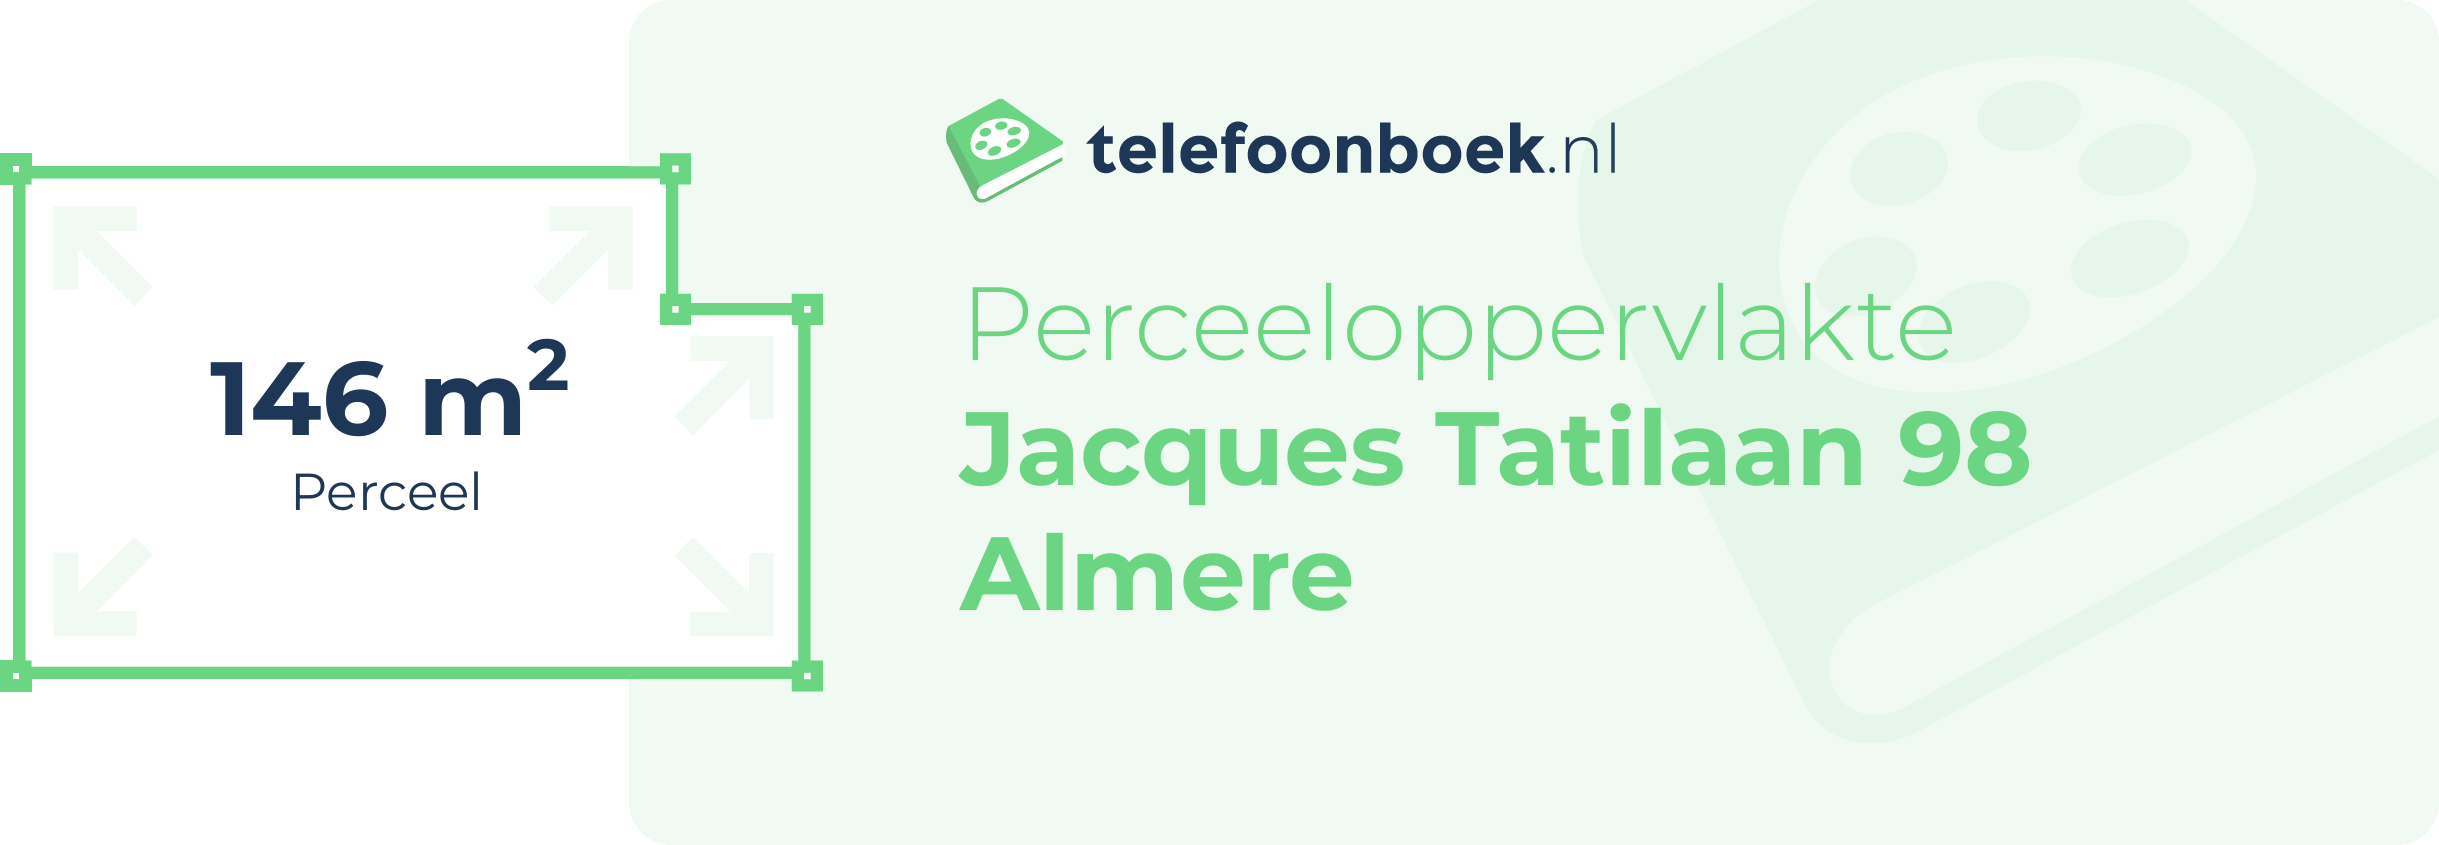 Perceeloppervlakte Jacques Tatilaan 98 Almere